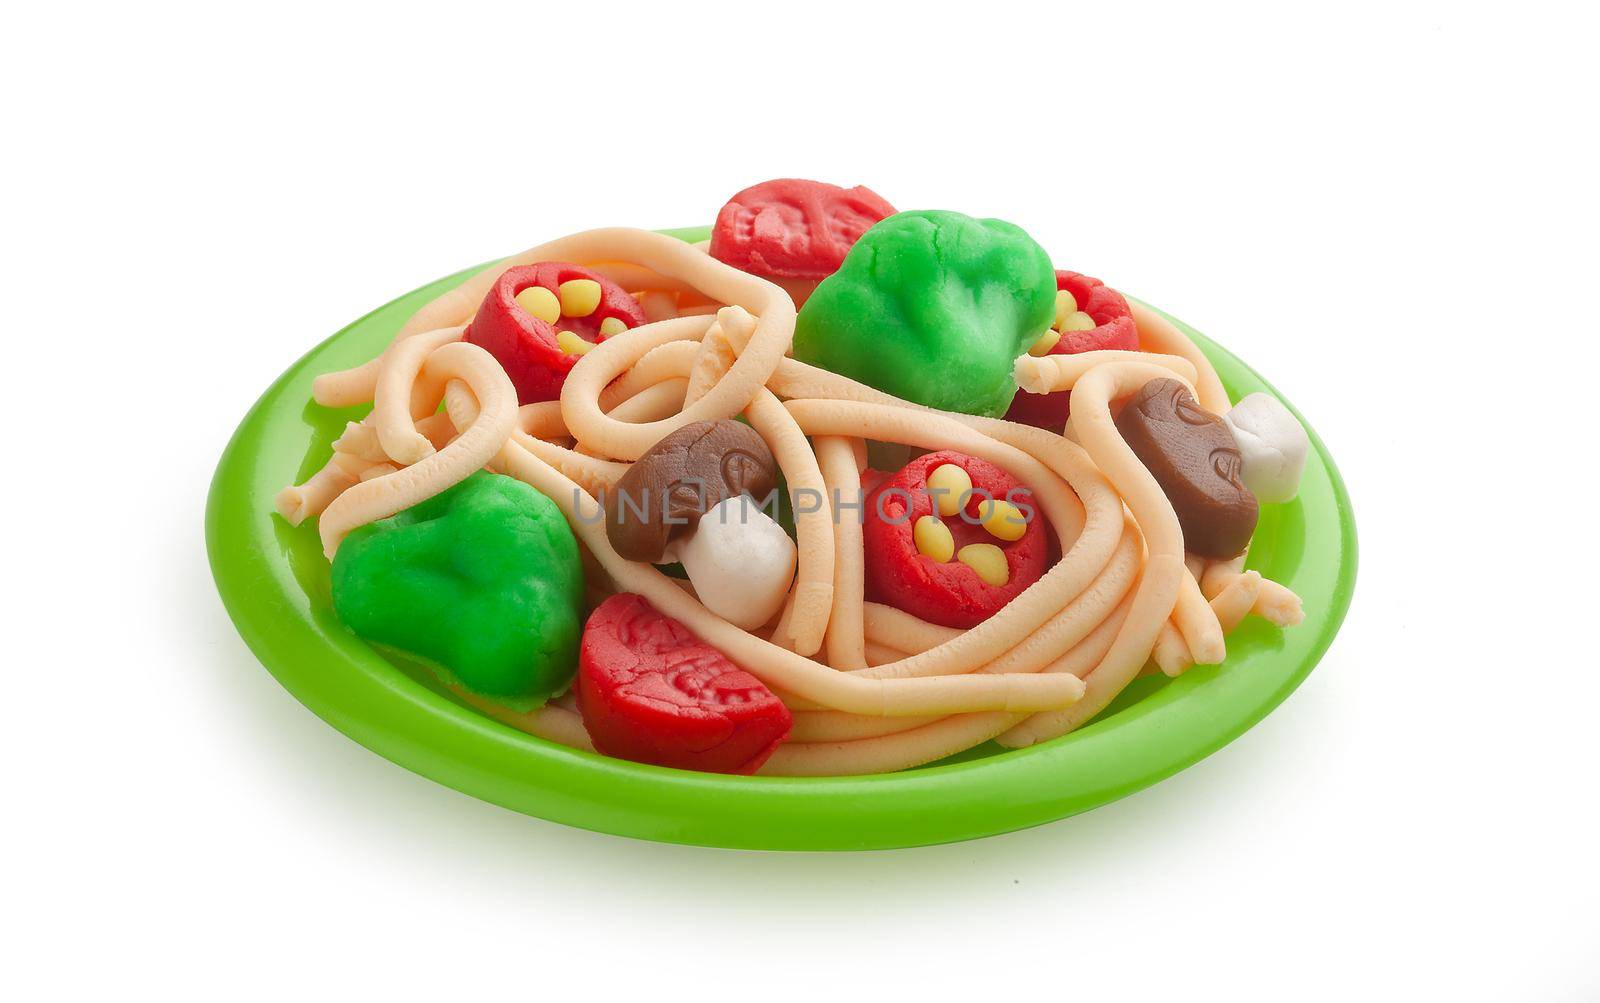 Plasticine pasta with vegetables by Angorius